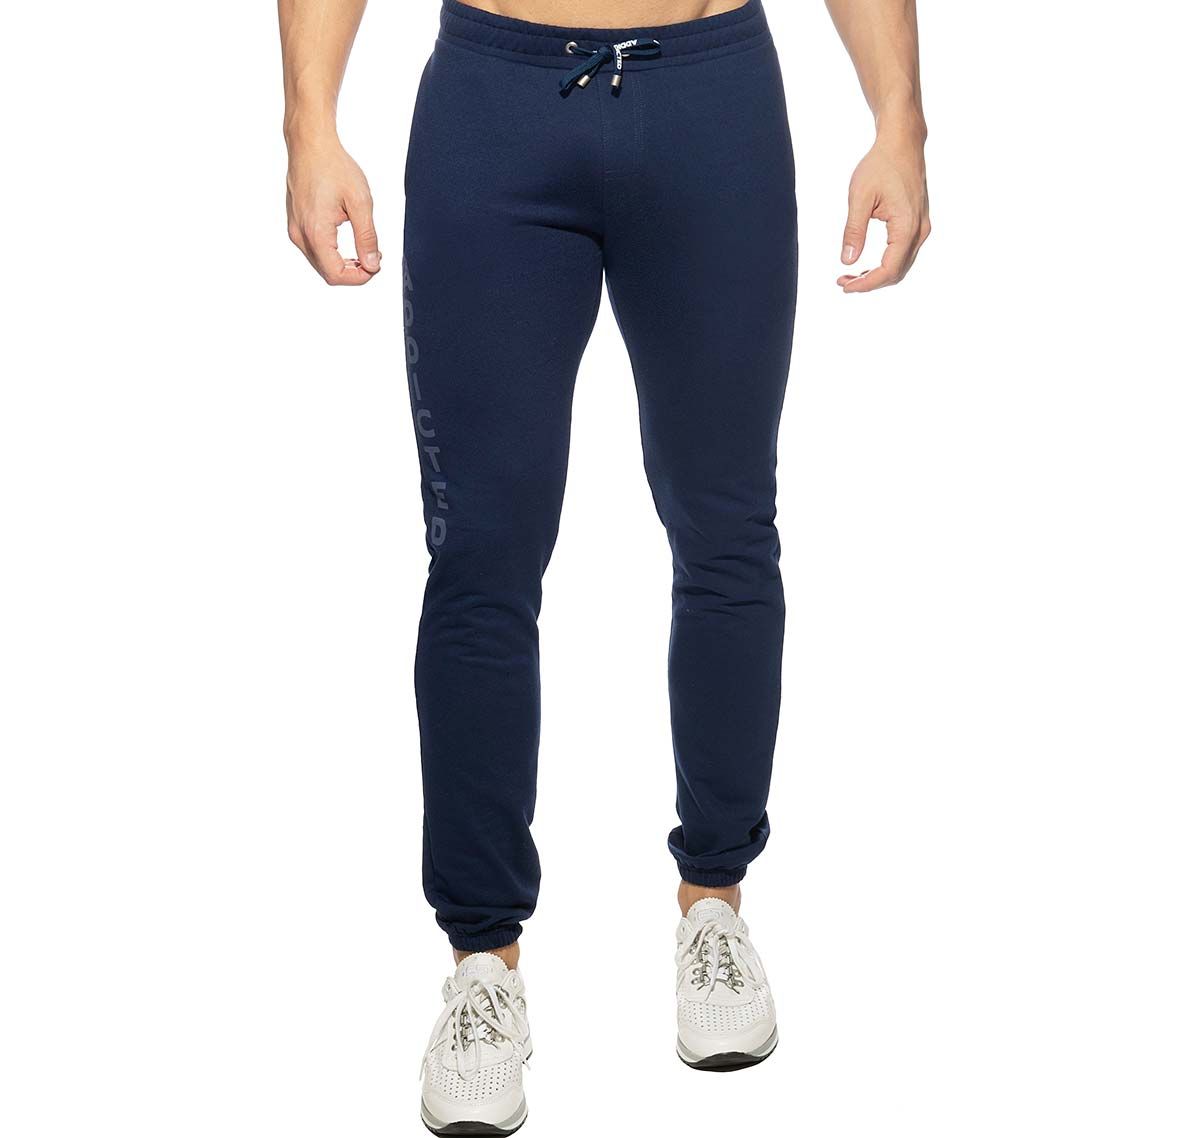 Addicted Training pants LONG JOGGING PANTS AD999, navy blue